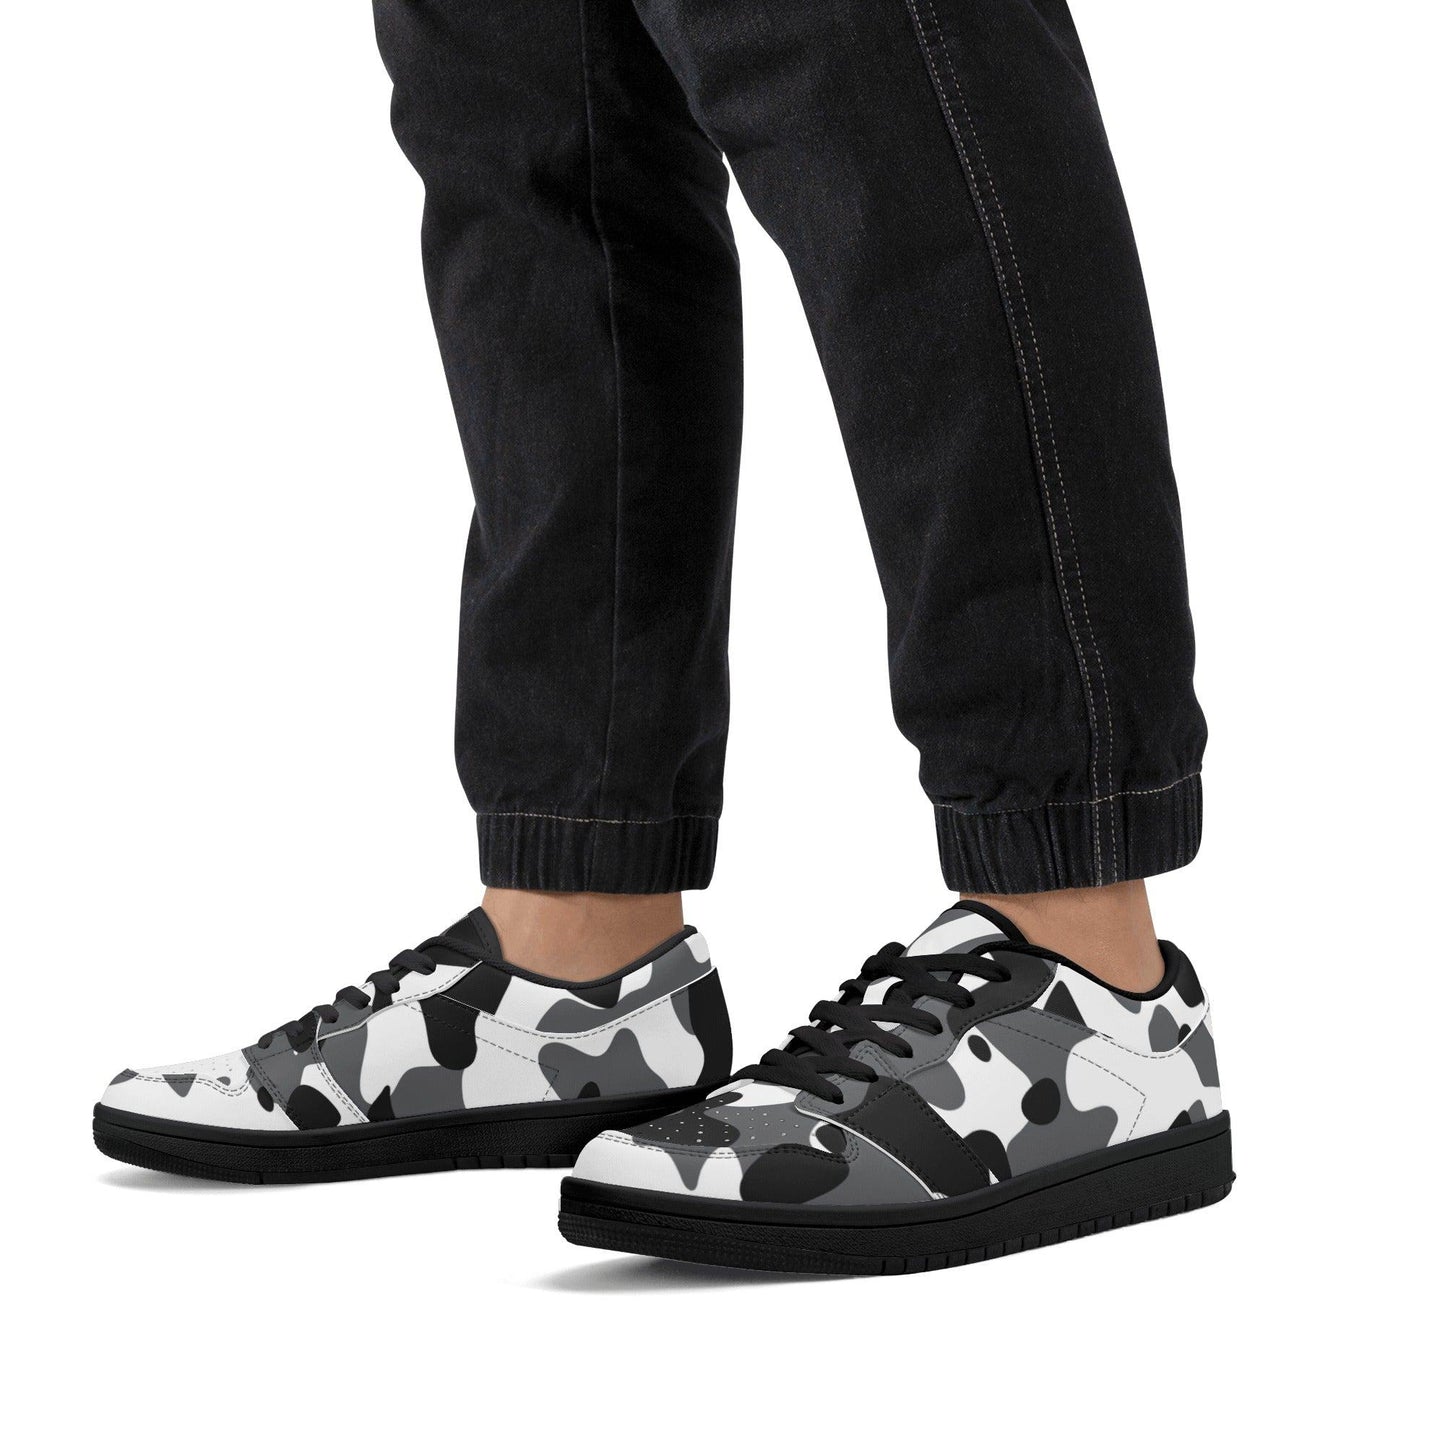 Schwarz Grau Weiß Camouflage Low Top Sneaker für Herren Low Top Sneaker 79.99 JLR Design